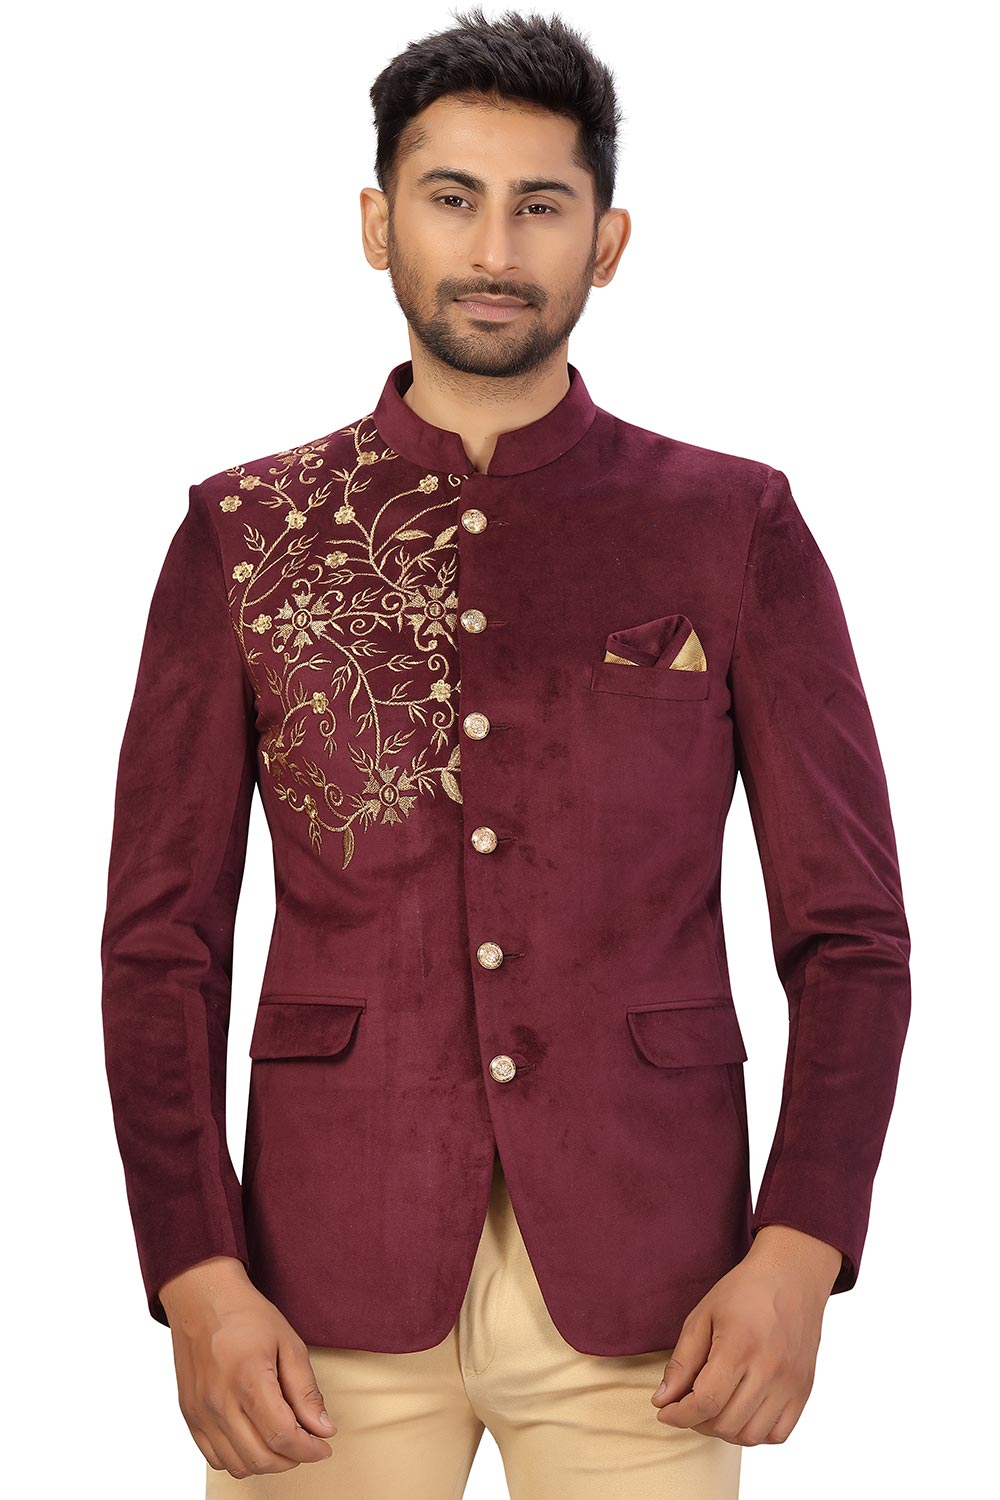 Buy Men's Velvet Embroidery Jodhpuri Set in Wine Online - Zoom Out